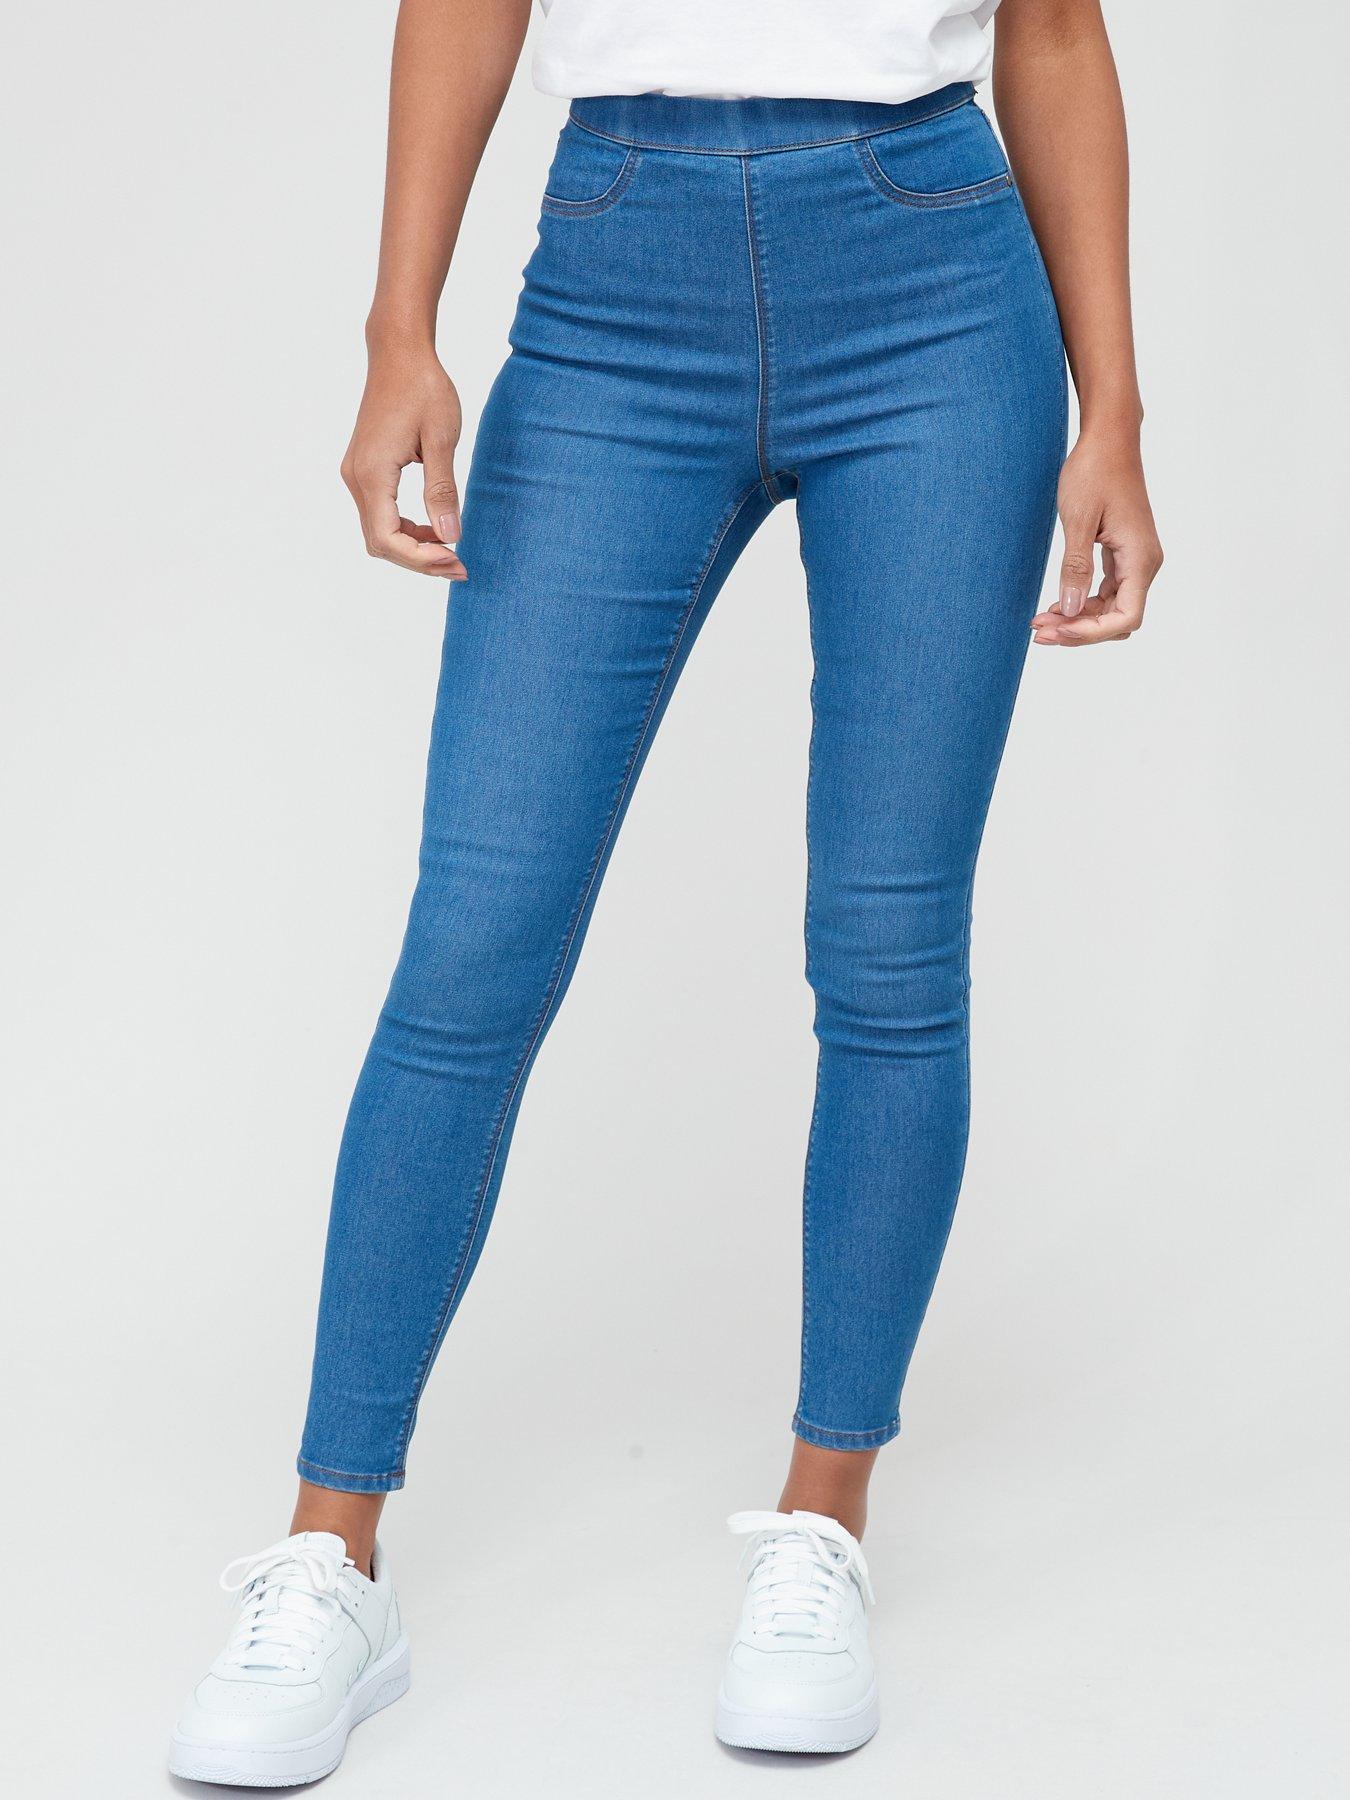 Jeggings, Women's Skinny Jeans